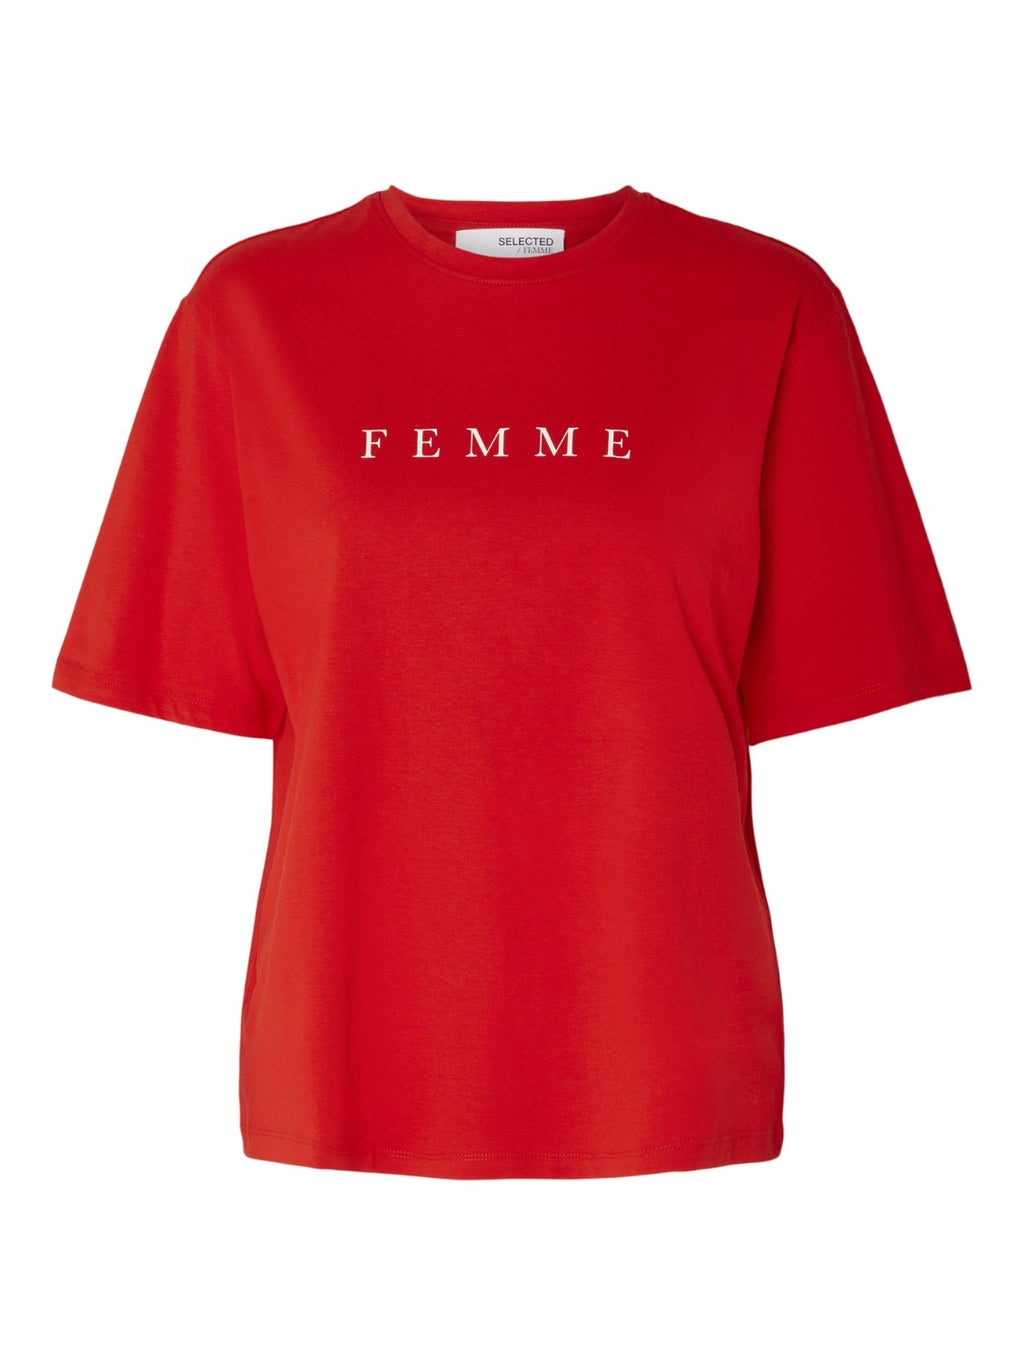 T-shirt Vilja printed, flame scarlet